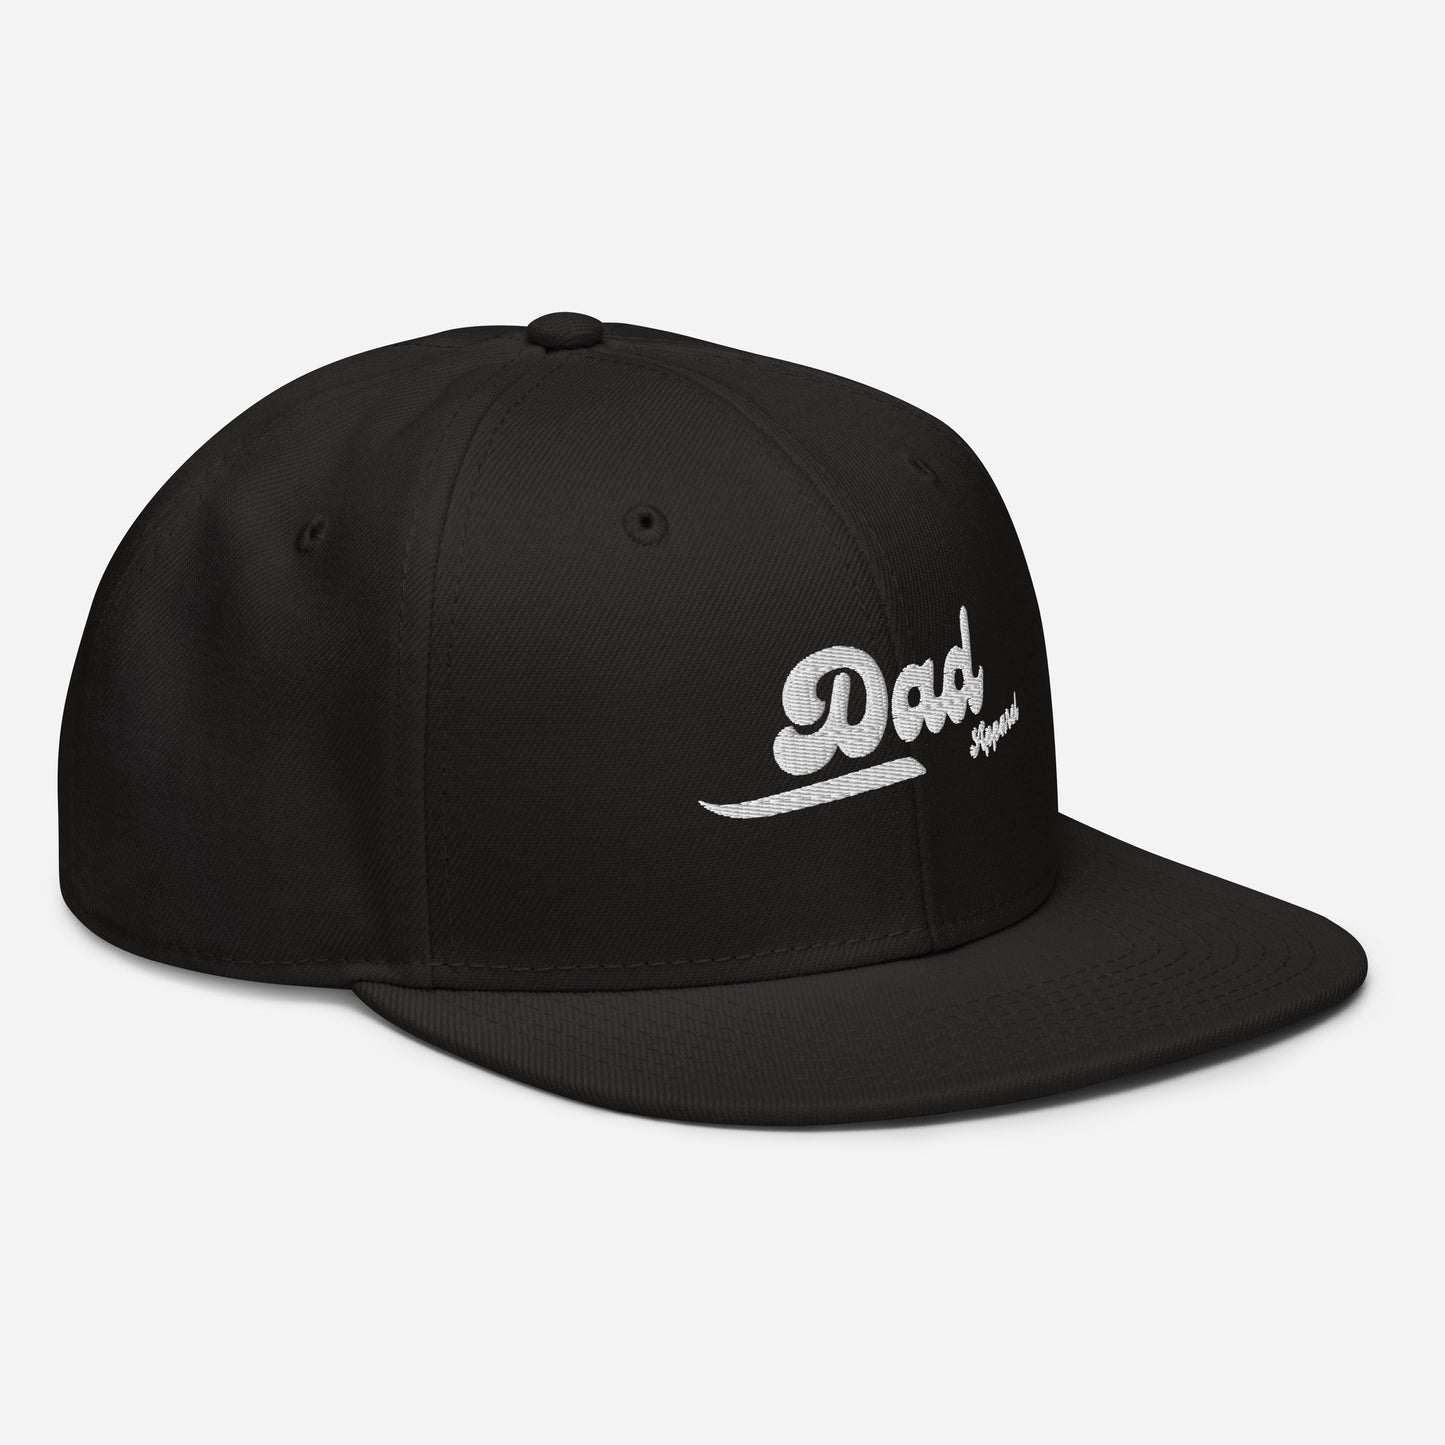 Girl Dad USA - Dad Snapback Hat